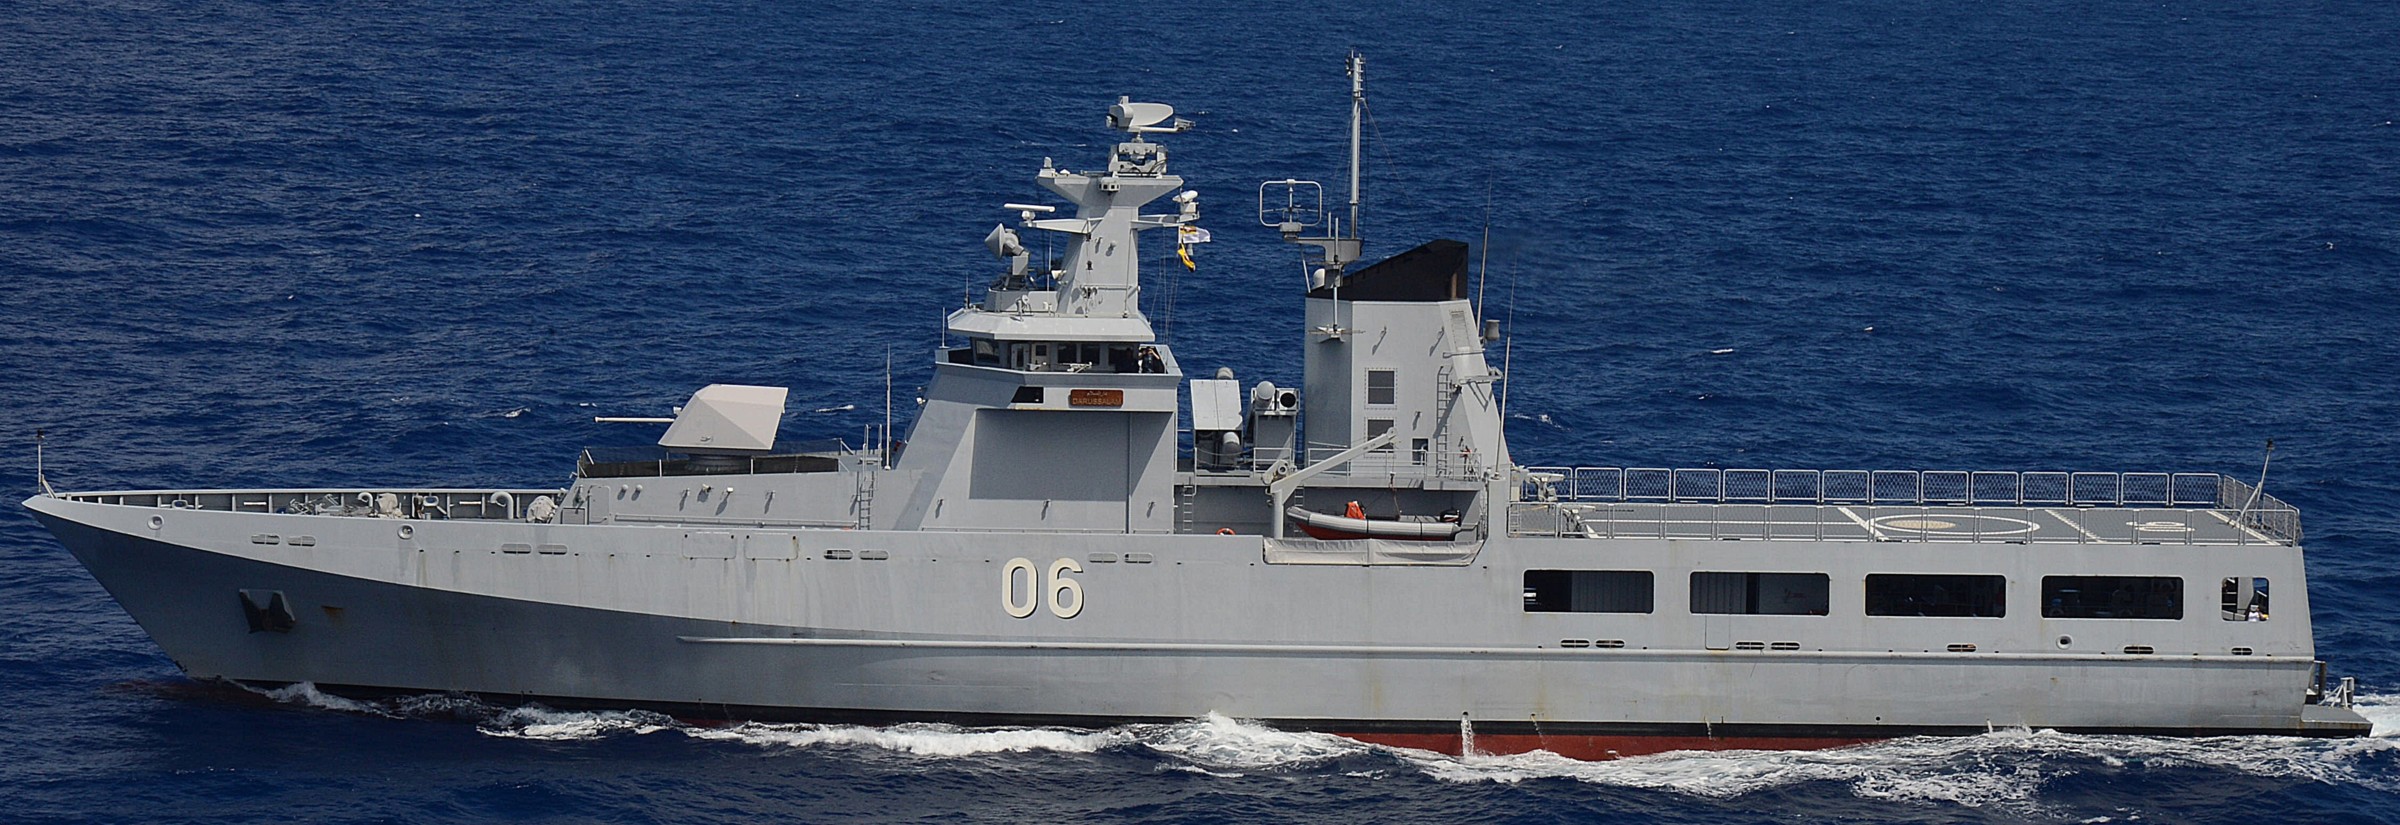 darussalam class offshore patrol vessel opv royal brunei navy tentera laut diraja brunei 02x